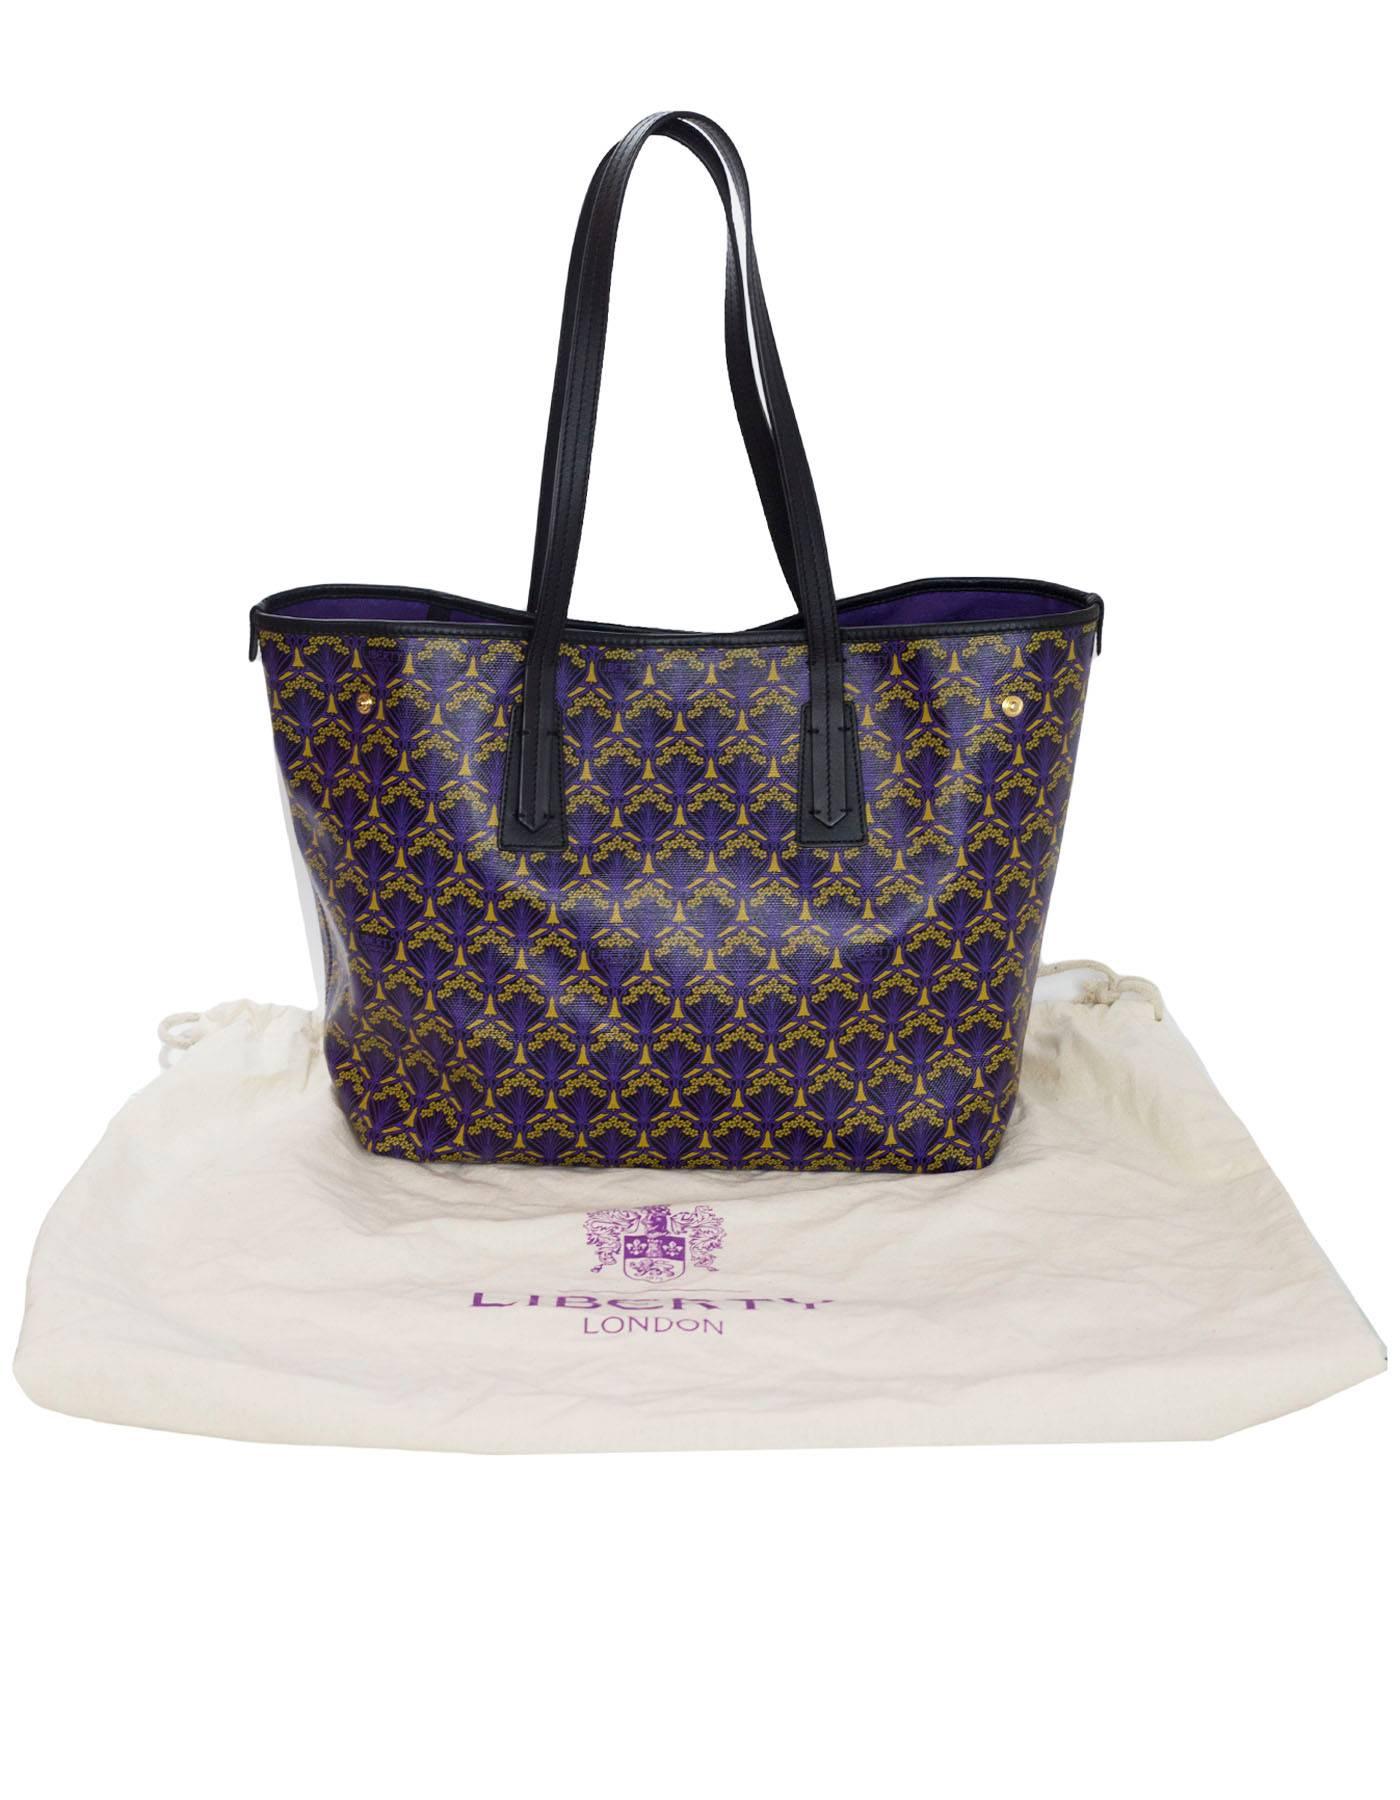 Women's Liberty London Purple Marlborough Iphis-Print Tote Bag rt. $595